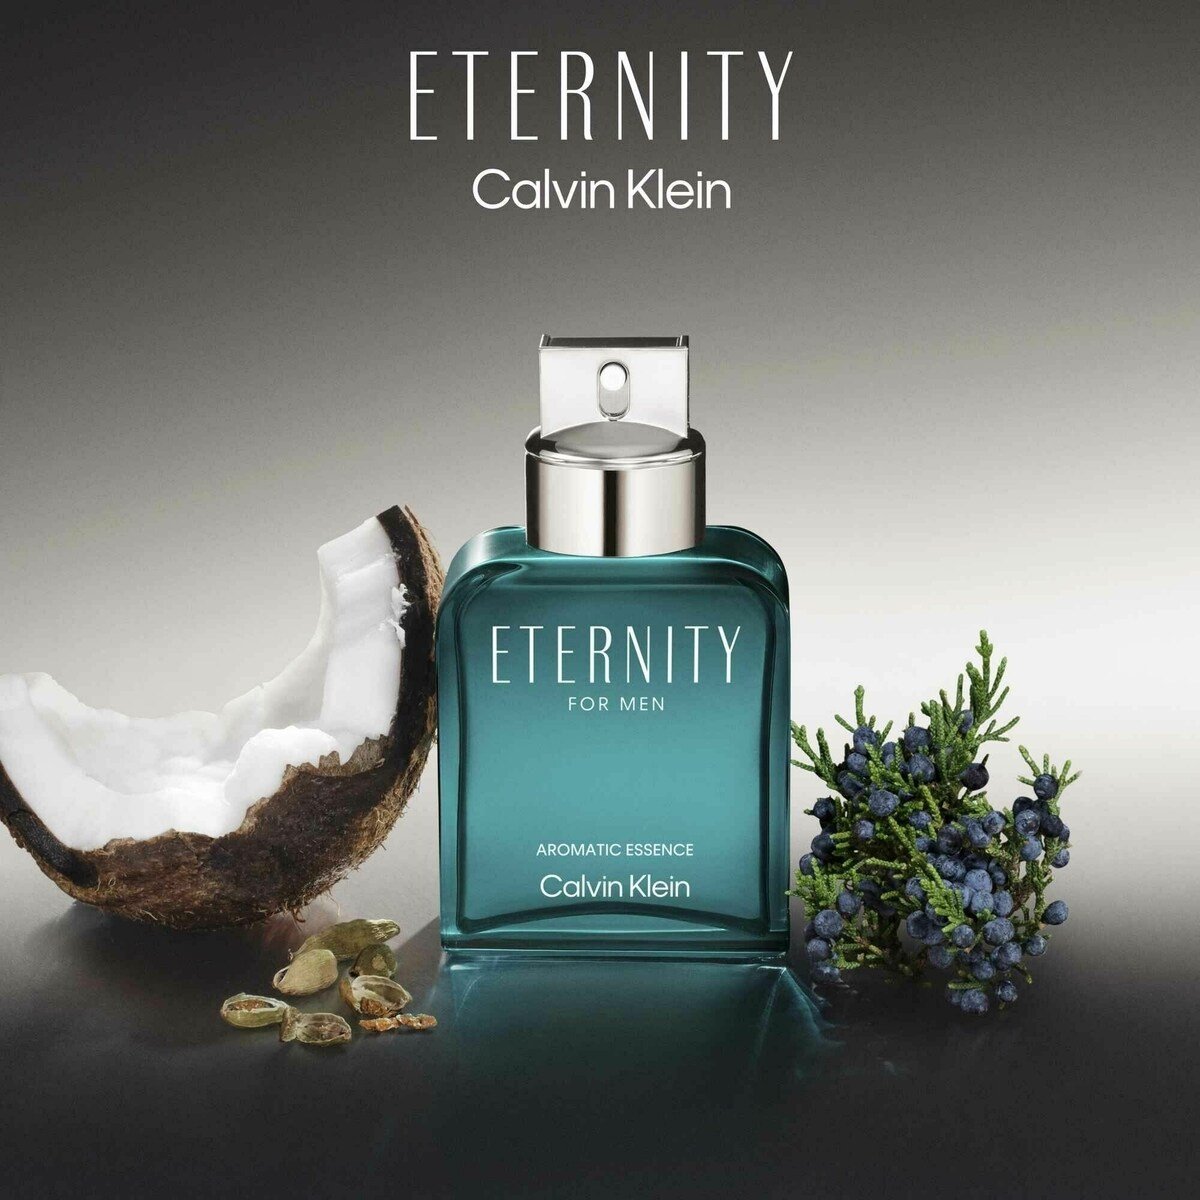 Eternity for Men Aromatic Essence